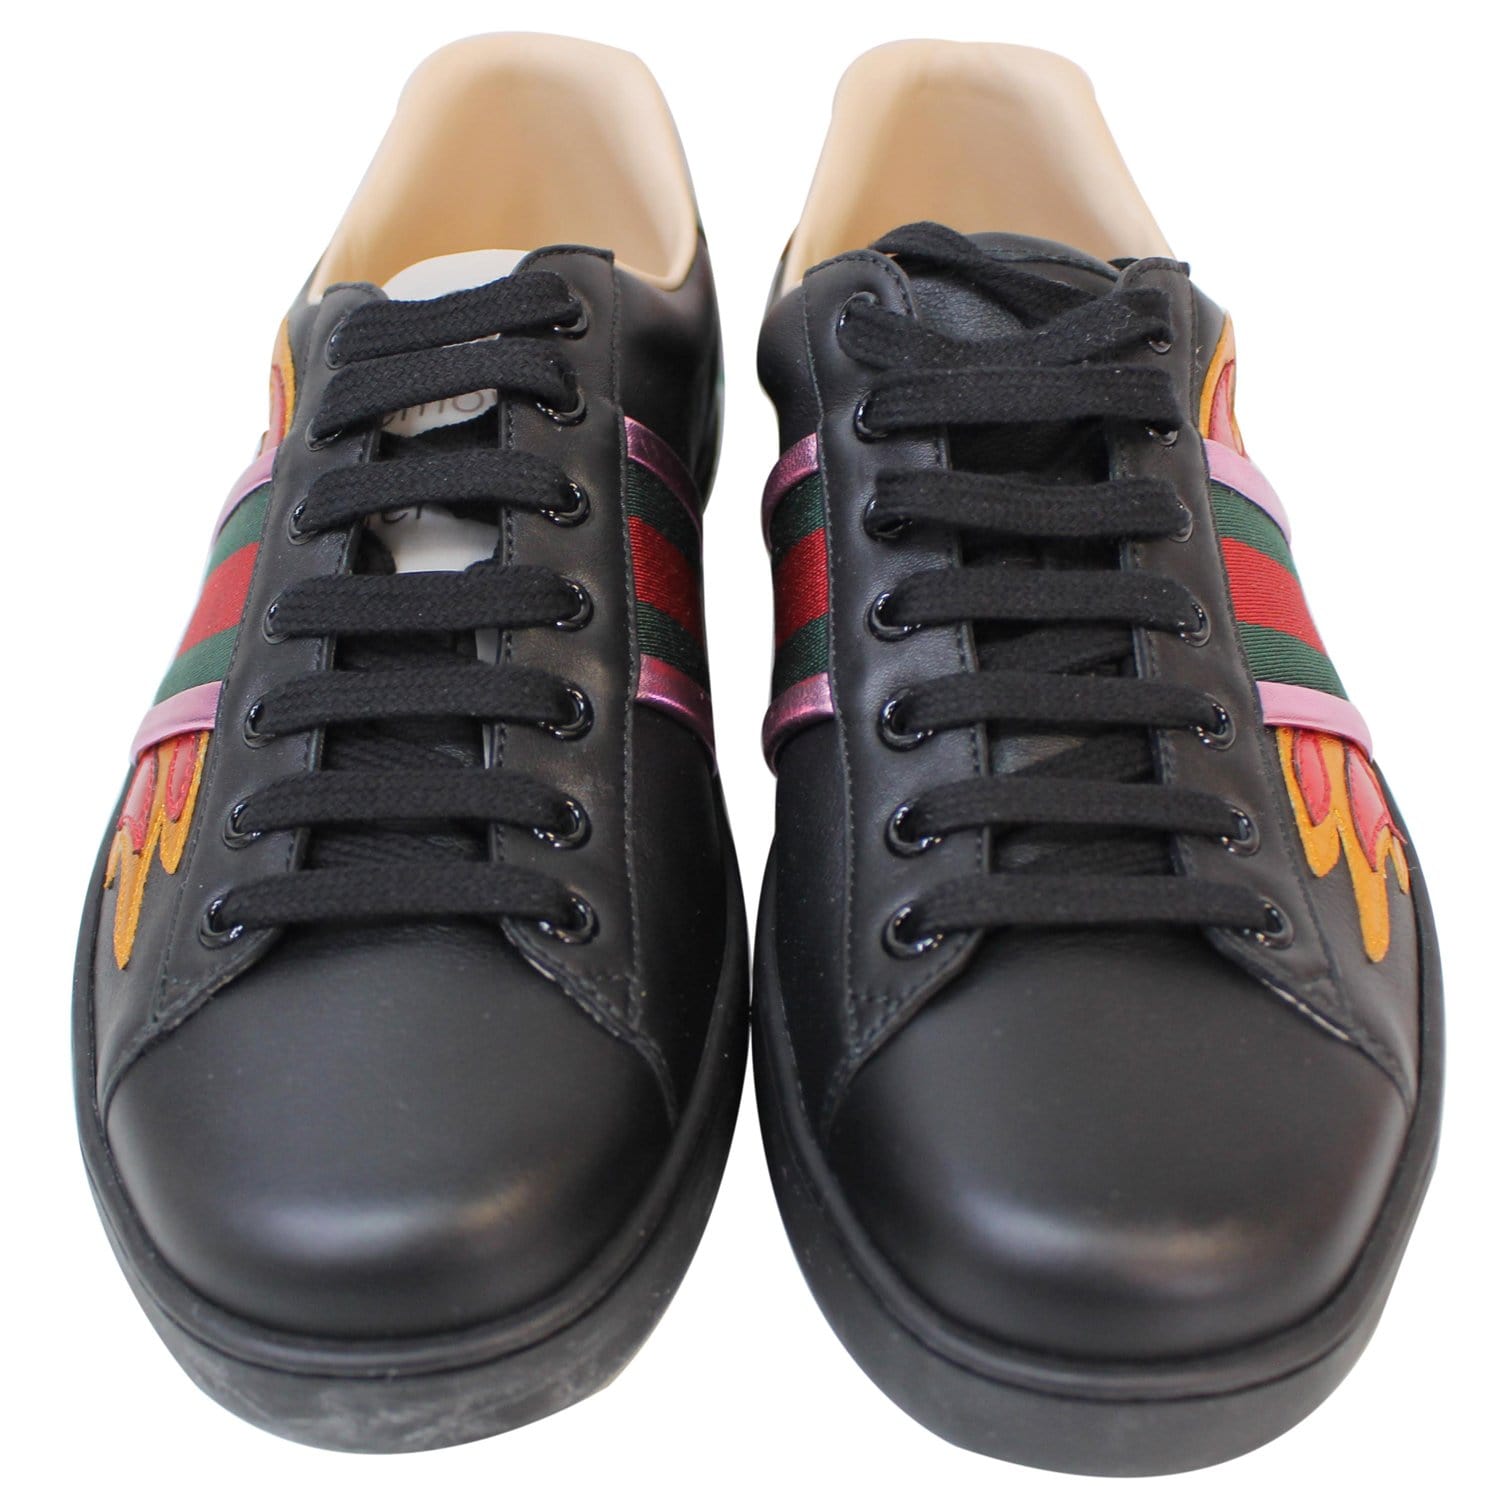 Voorvoegsel lanthaan hemel GUCCI Ace Low-Top Flames Sneaker Black 440724 US 7.5